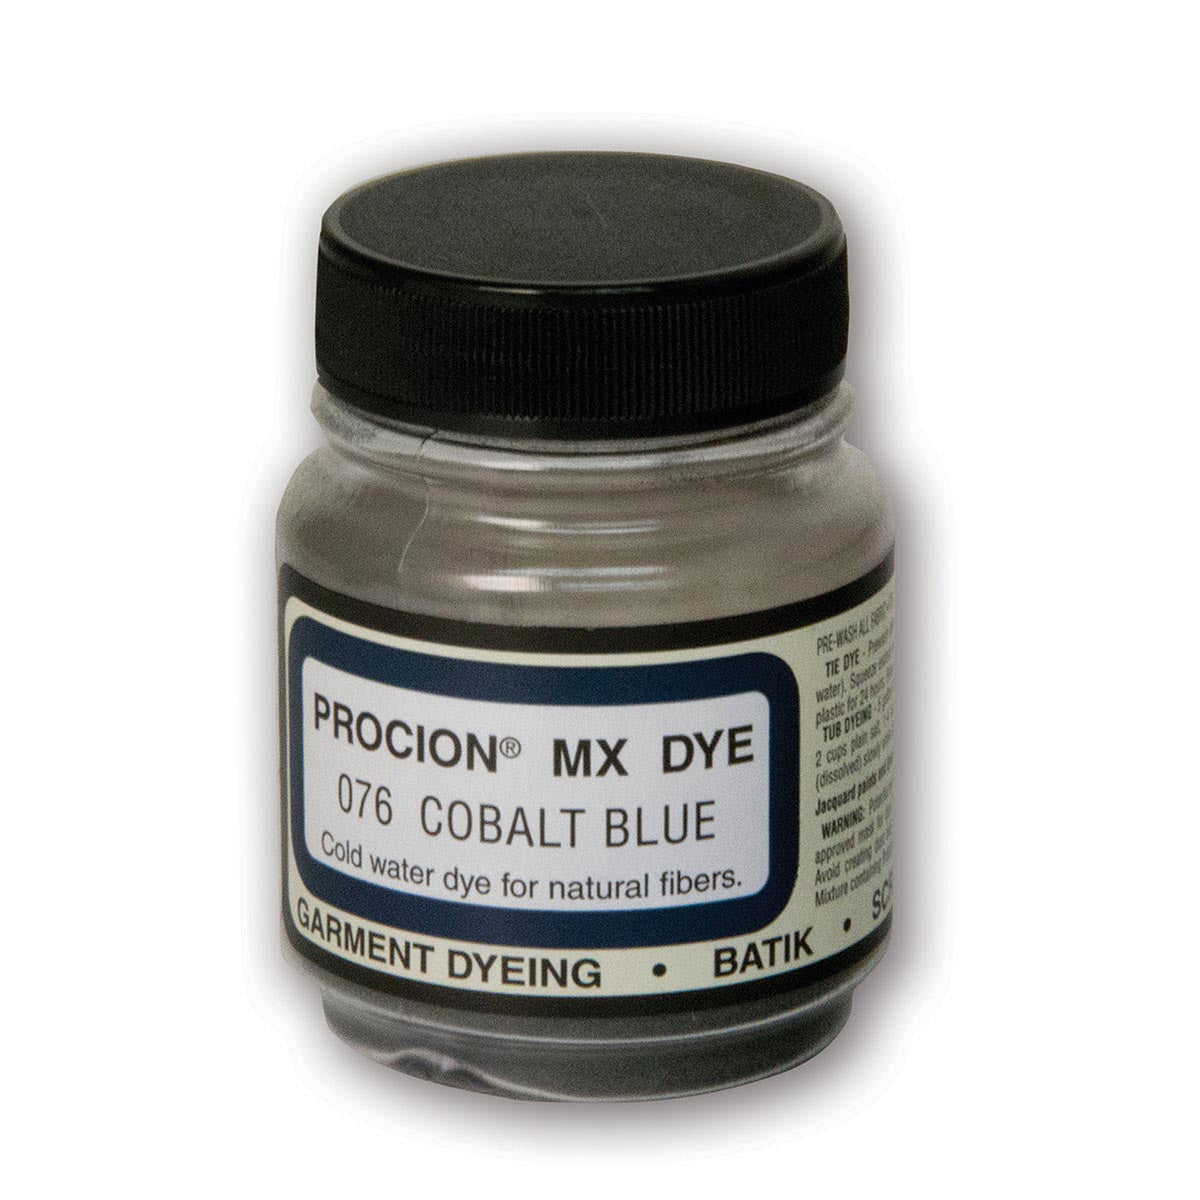 Jacquard - Procion MX Dye - Stoff Textil - Kobaltblau 076